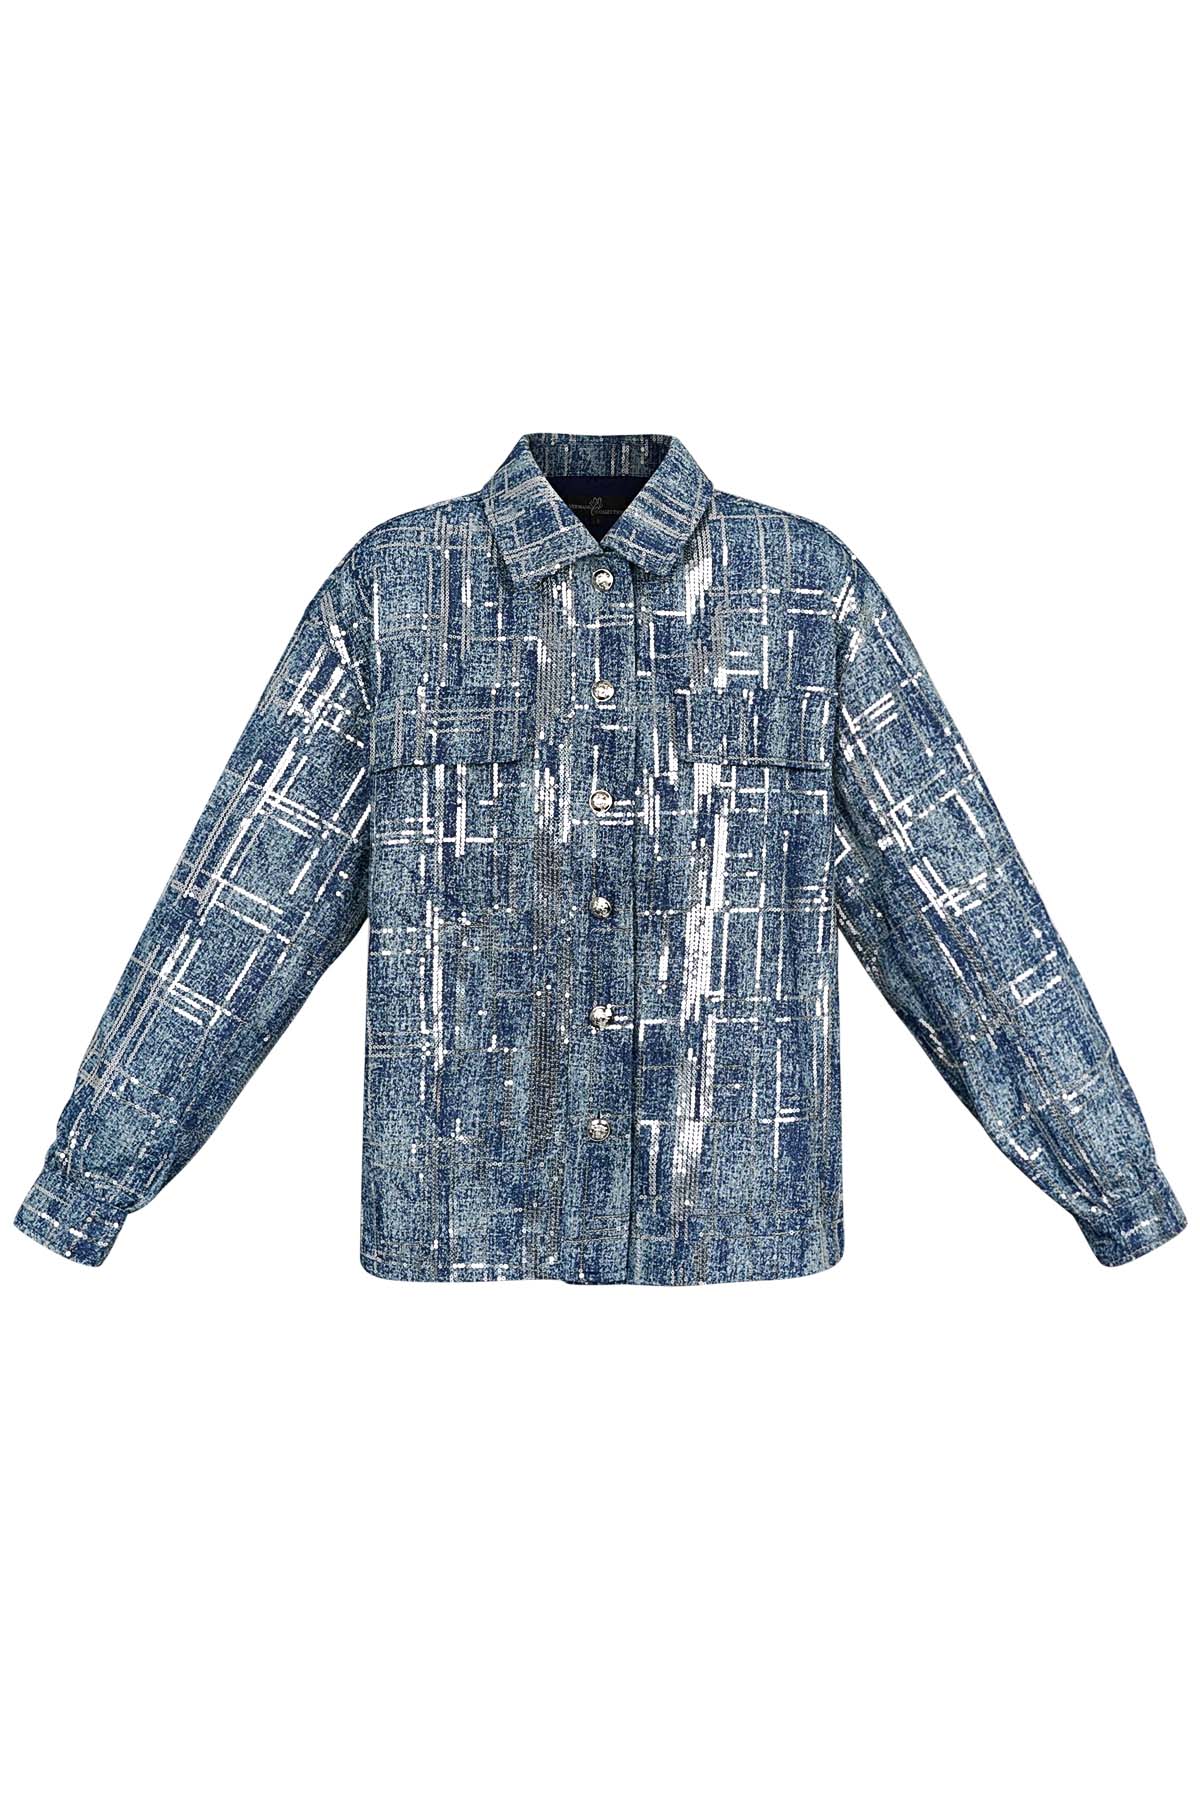 Jacket denim look with sequins - blue - S h5 